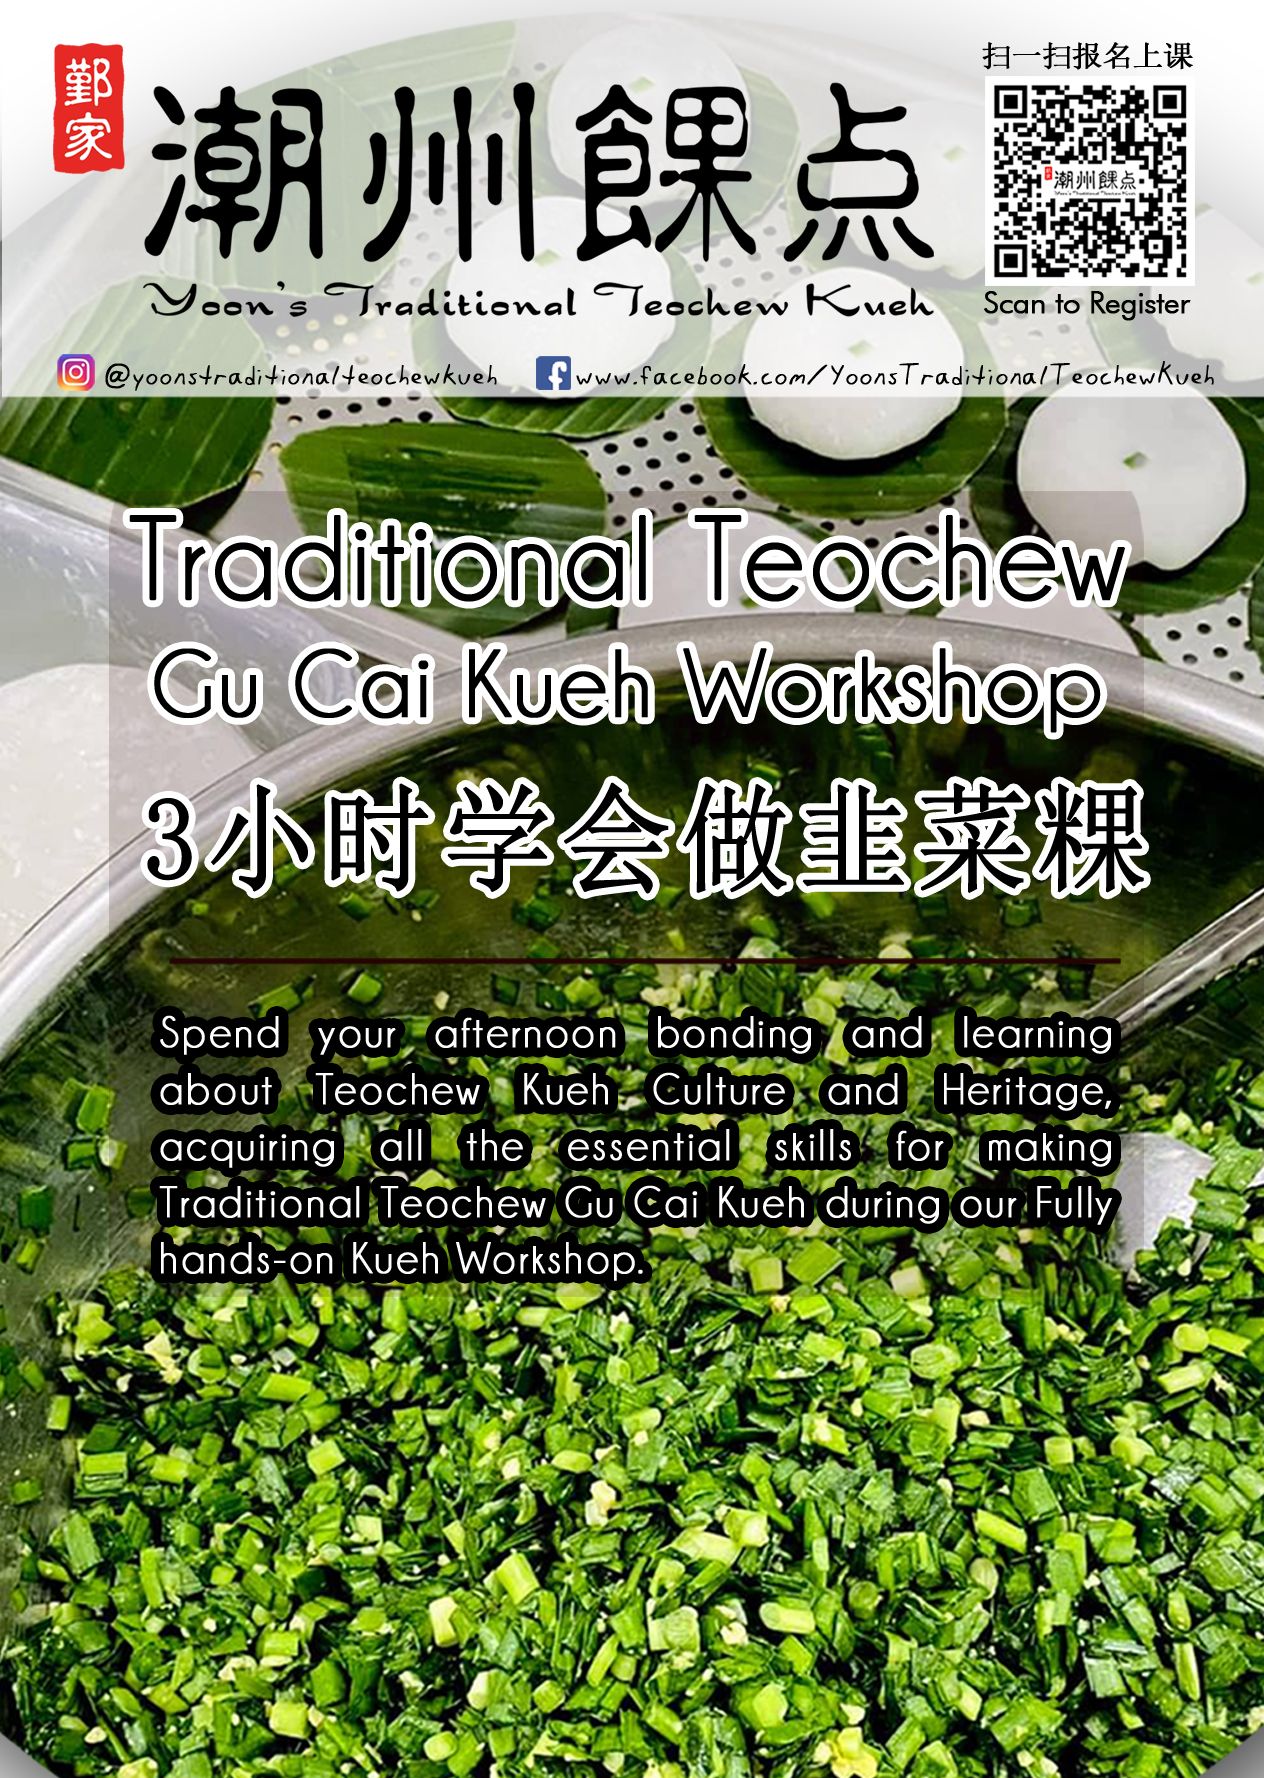 Traditional Teochew Gu Cai Kueh Workshop (Fully Hands-on)